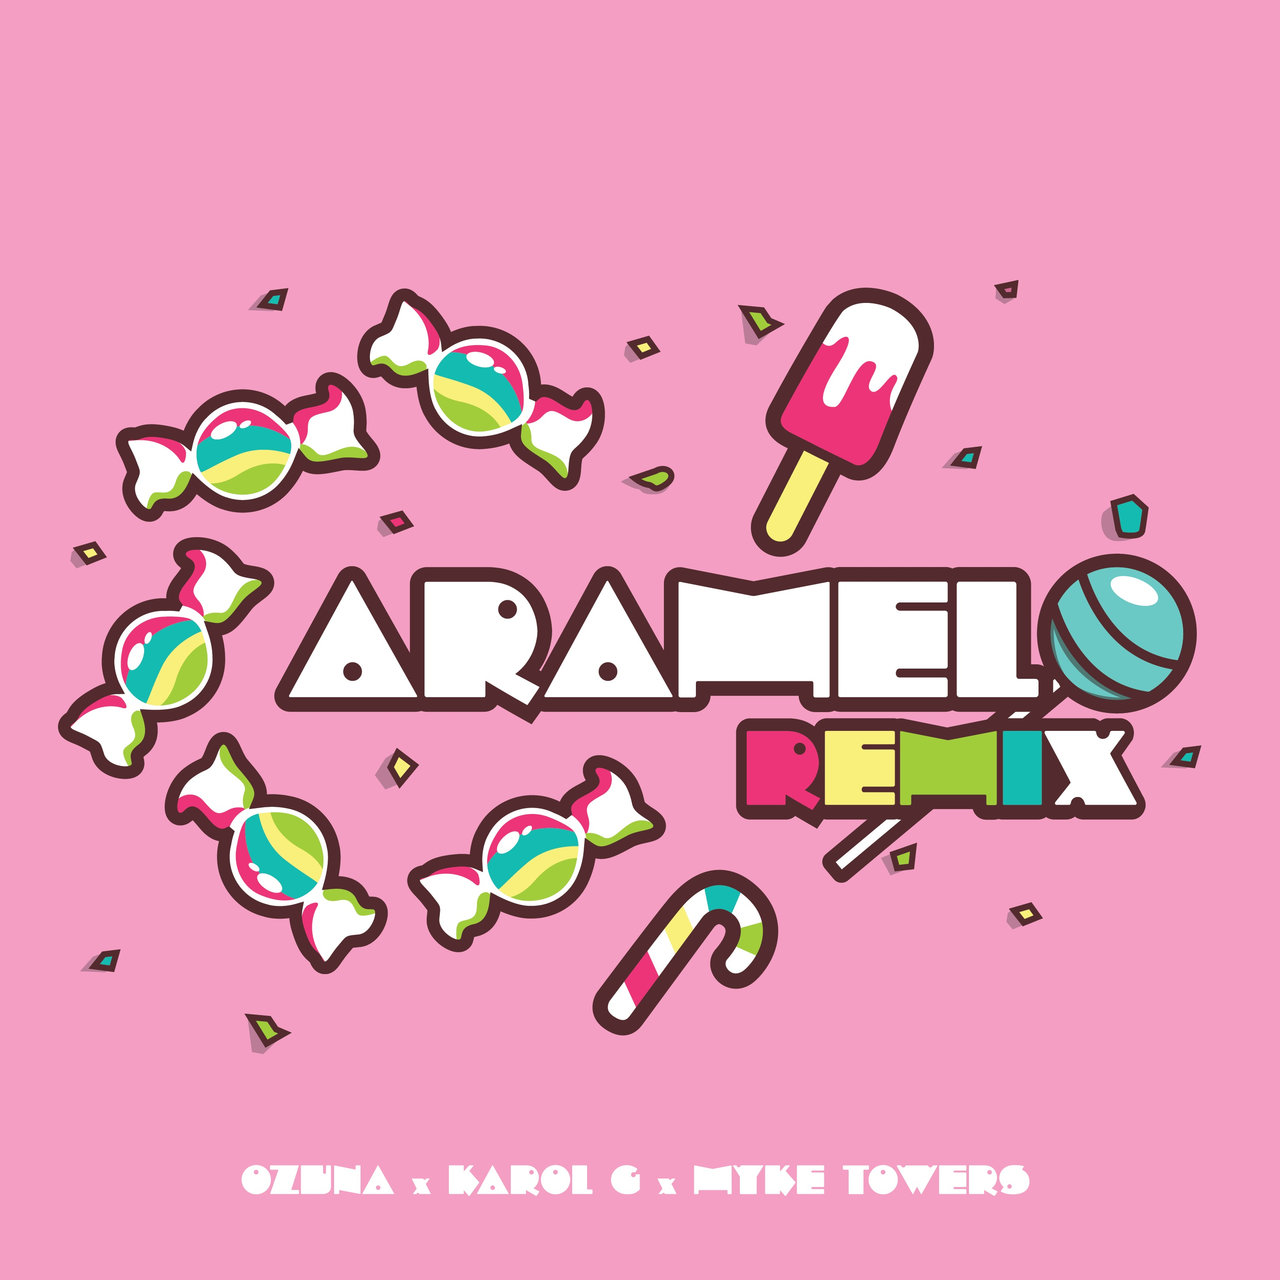 Ozuna, KAROL G, & Myke Towers — Caramelo (Remix) cover artwork